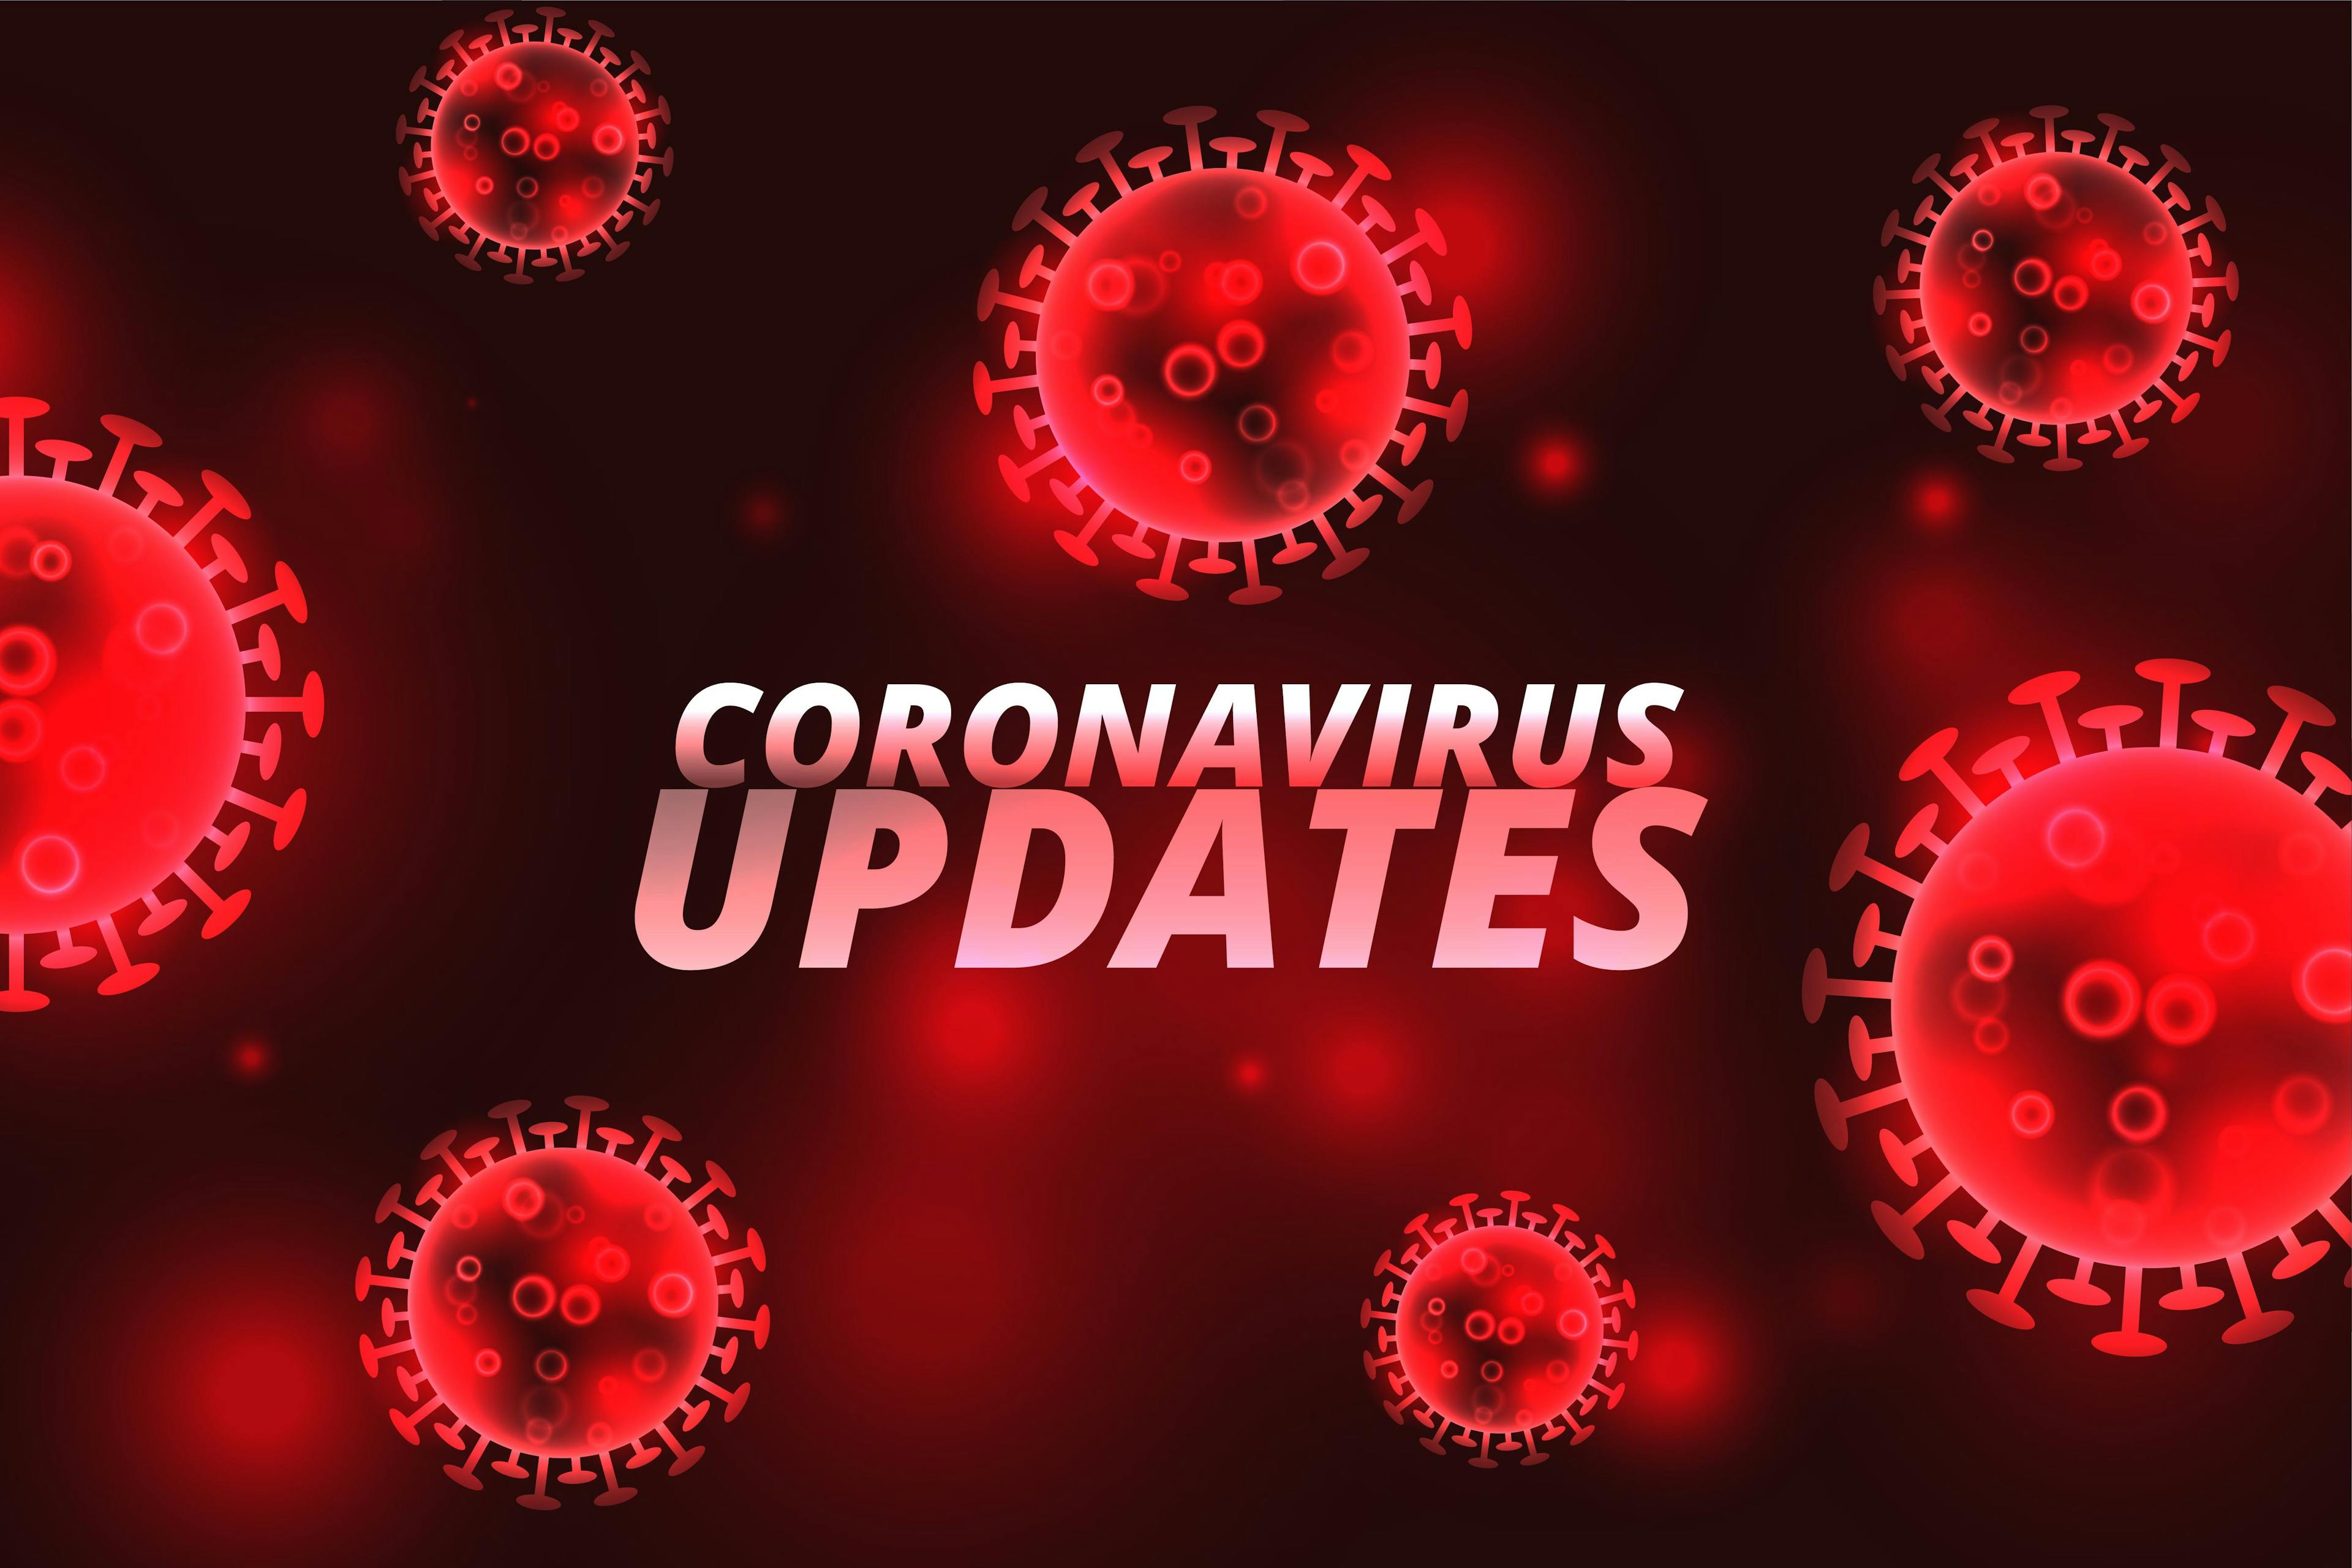 covid-19 updates